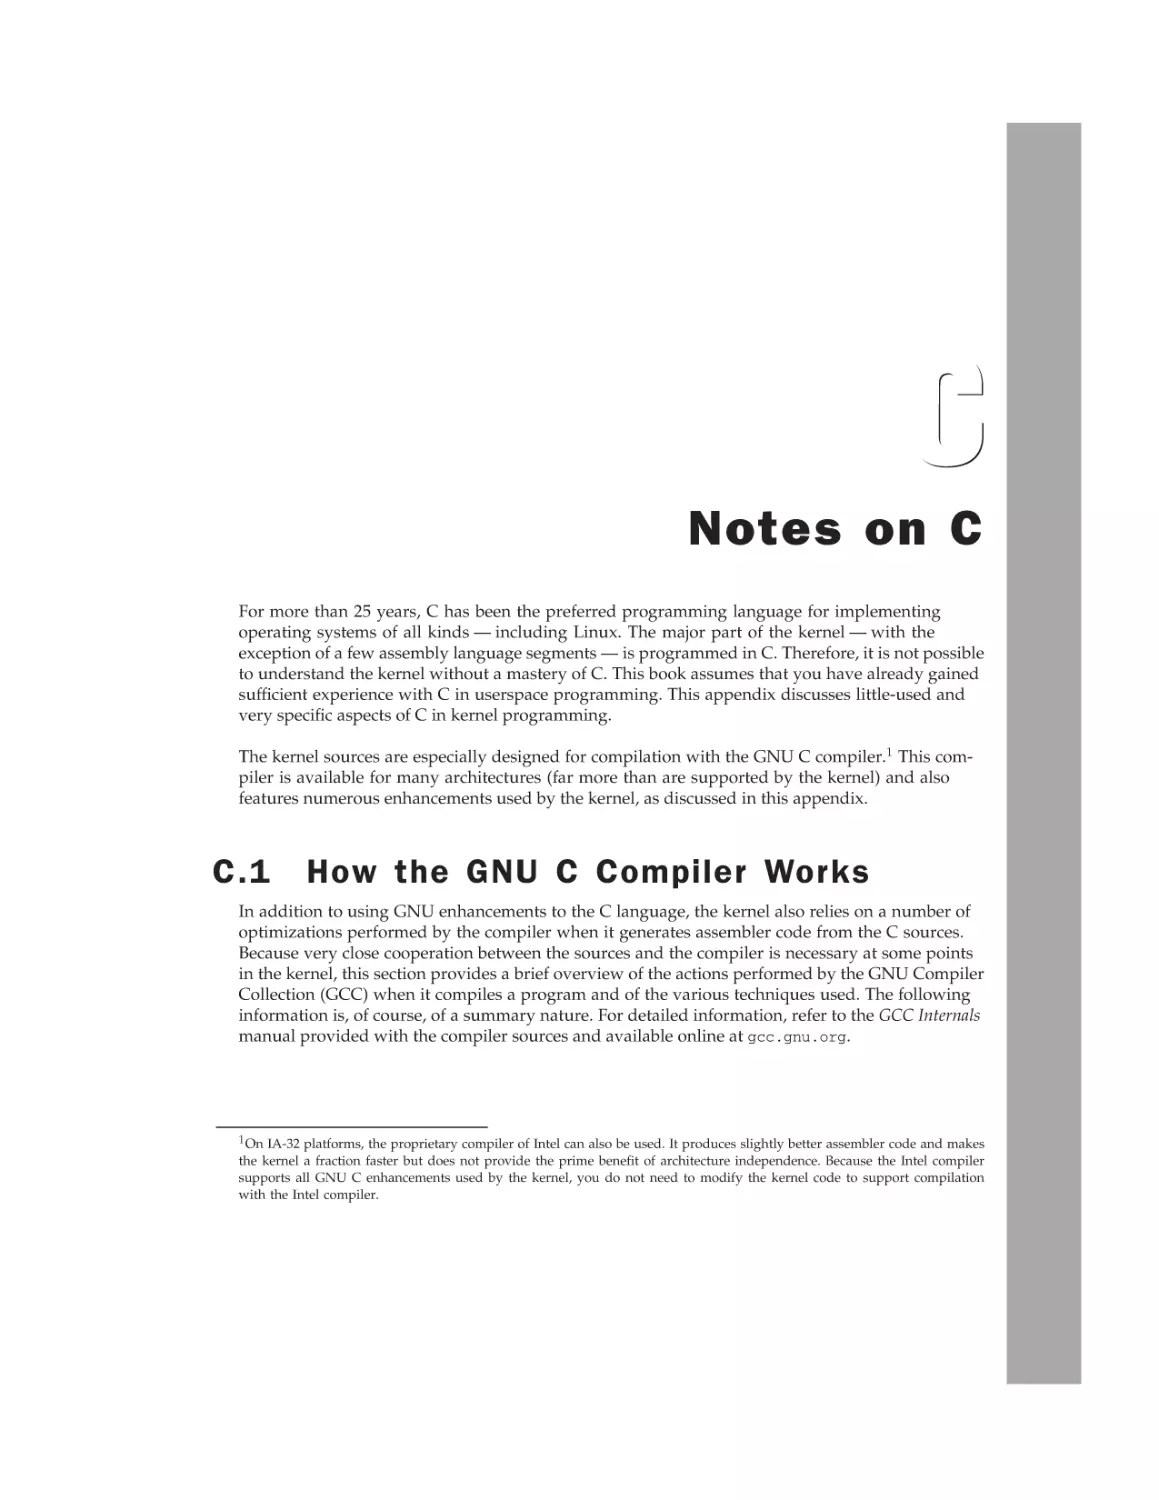 Appendix C
C.1 How the GNU C Compiler Works